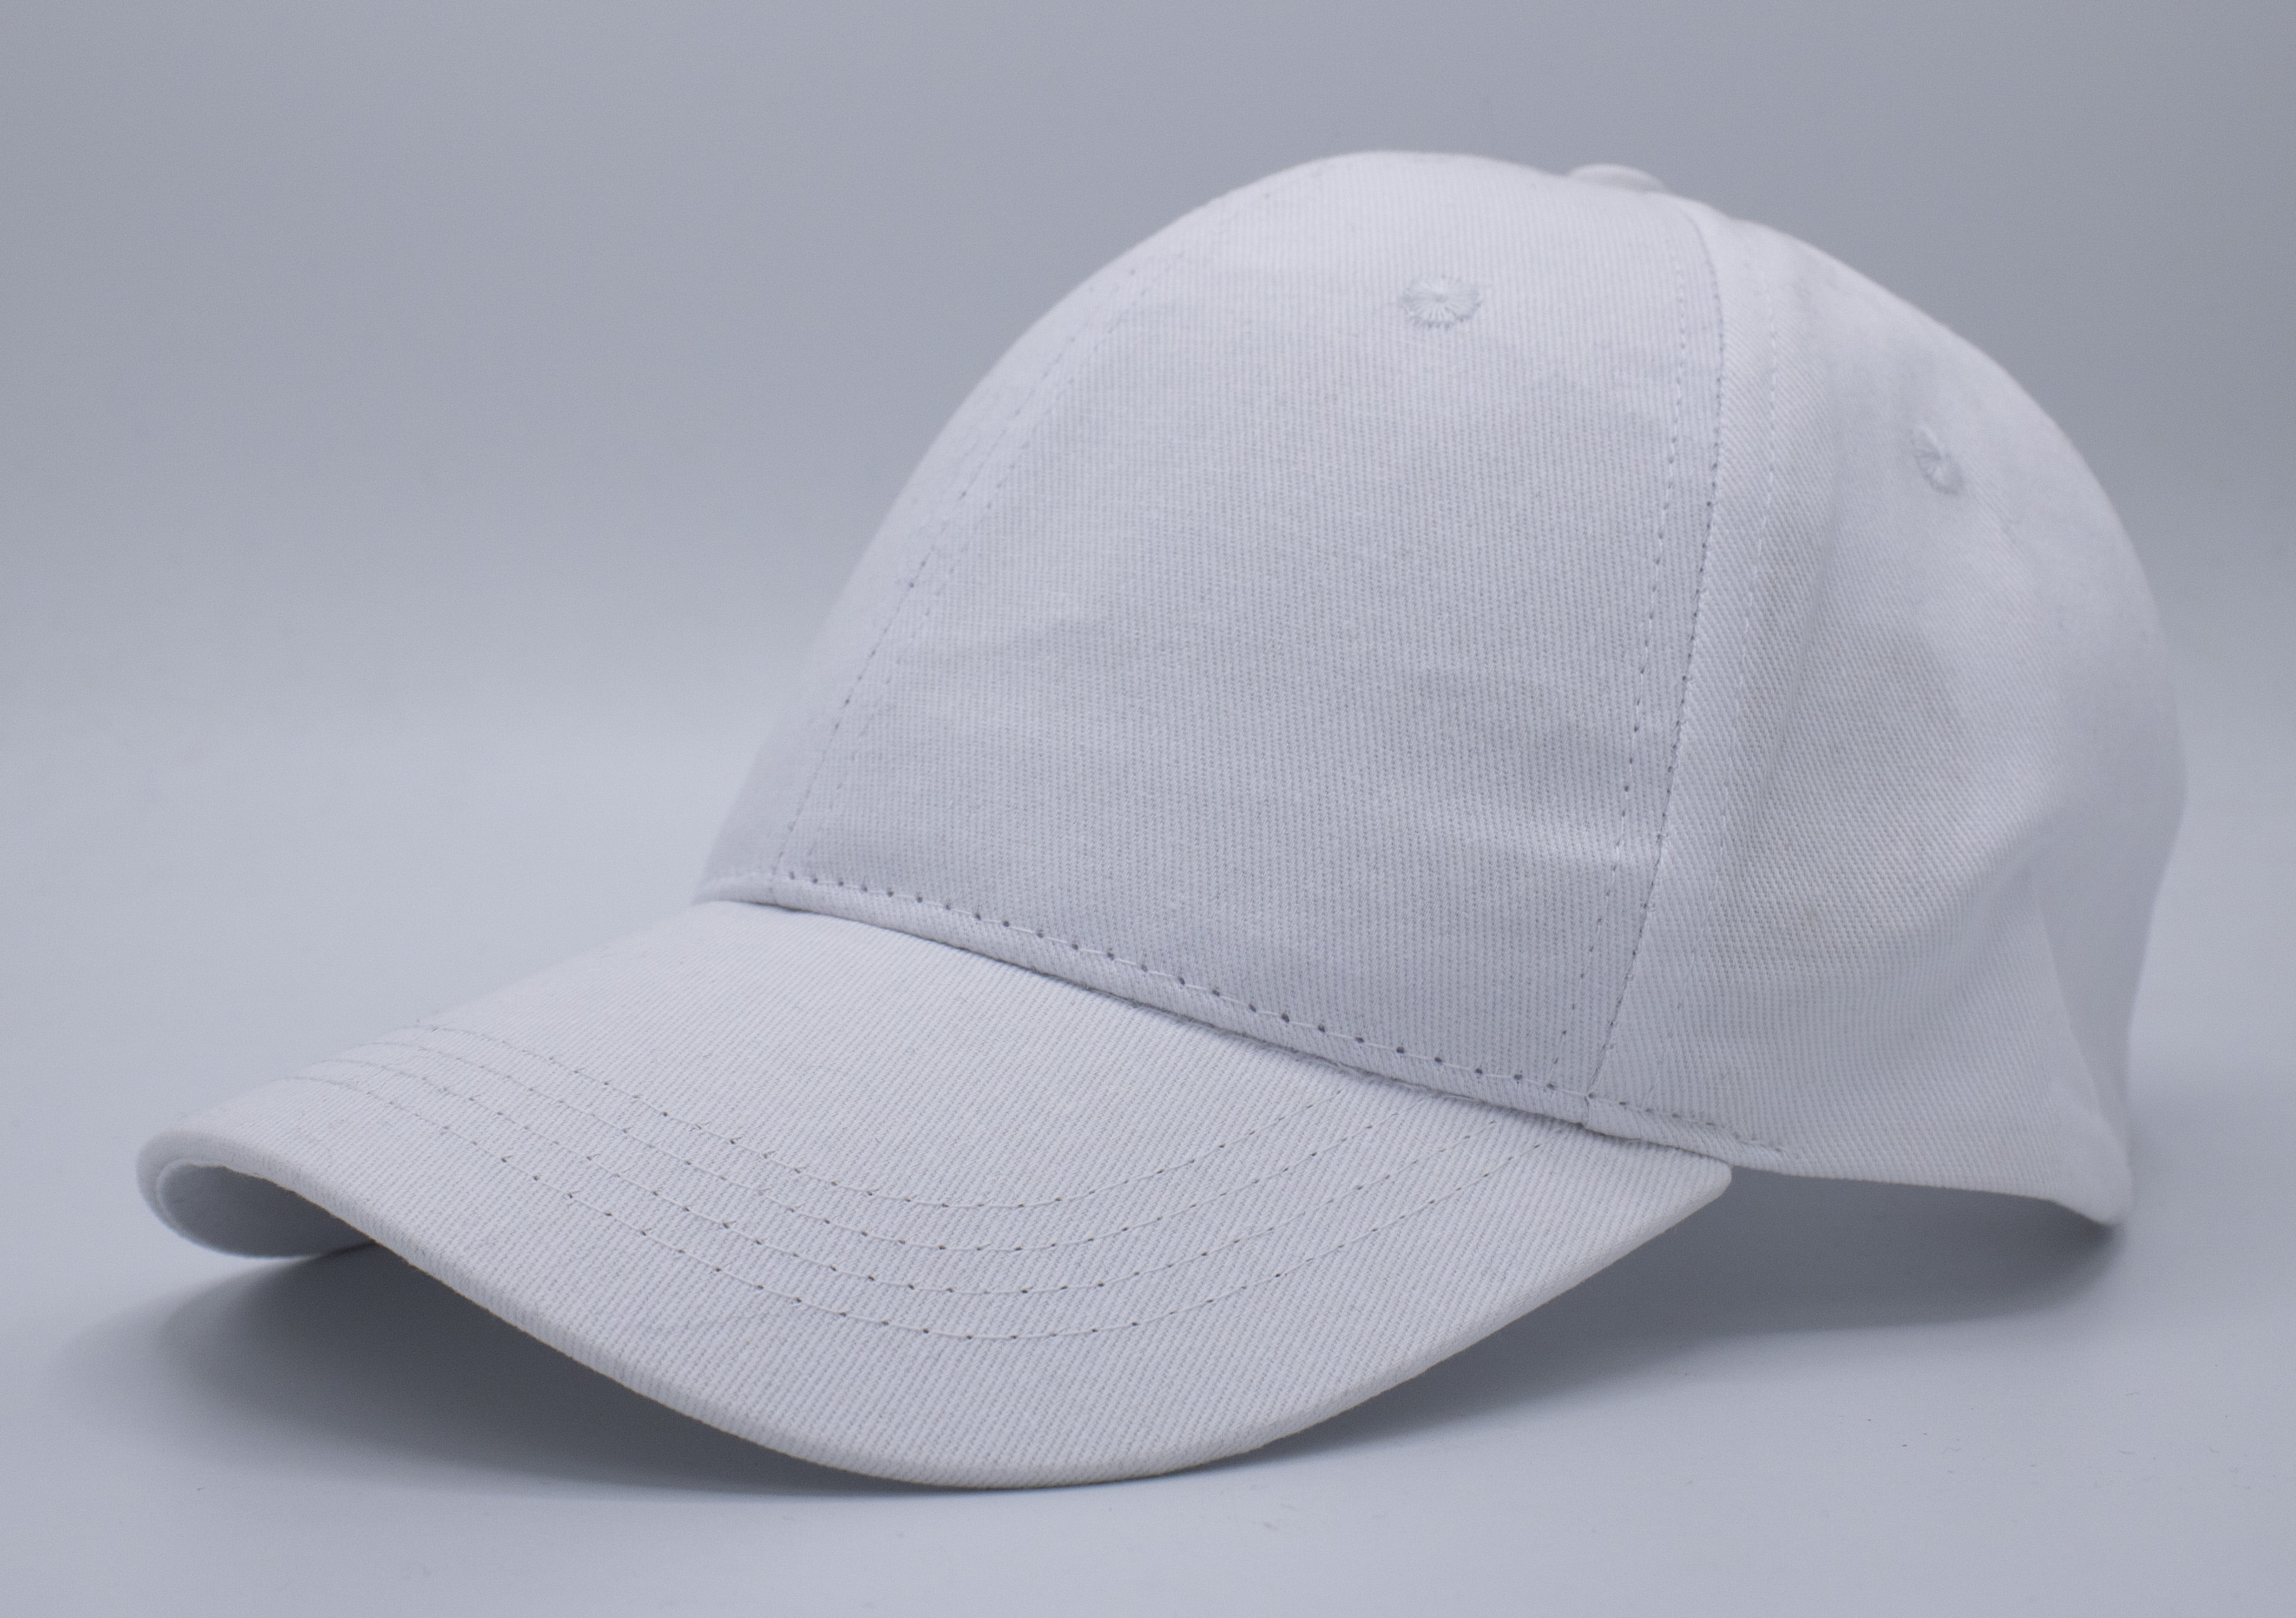 Honda Official Licensed Baseball Hat Cap Type R All White 100% Cotton Woven L... 